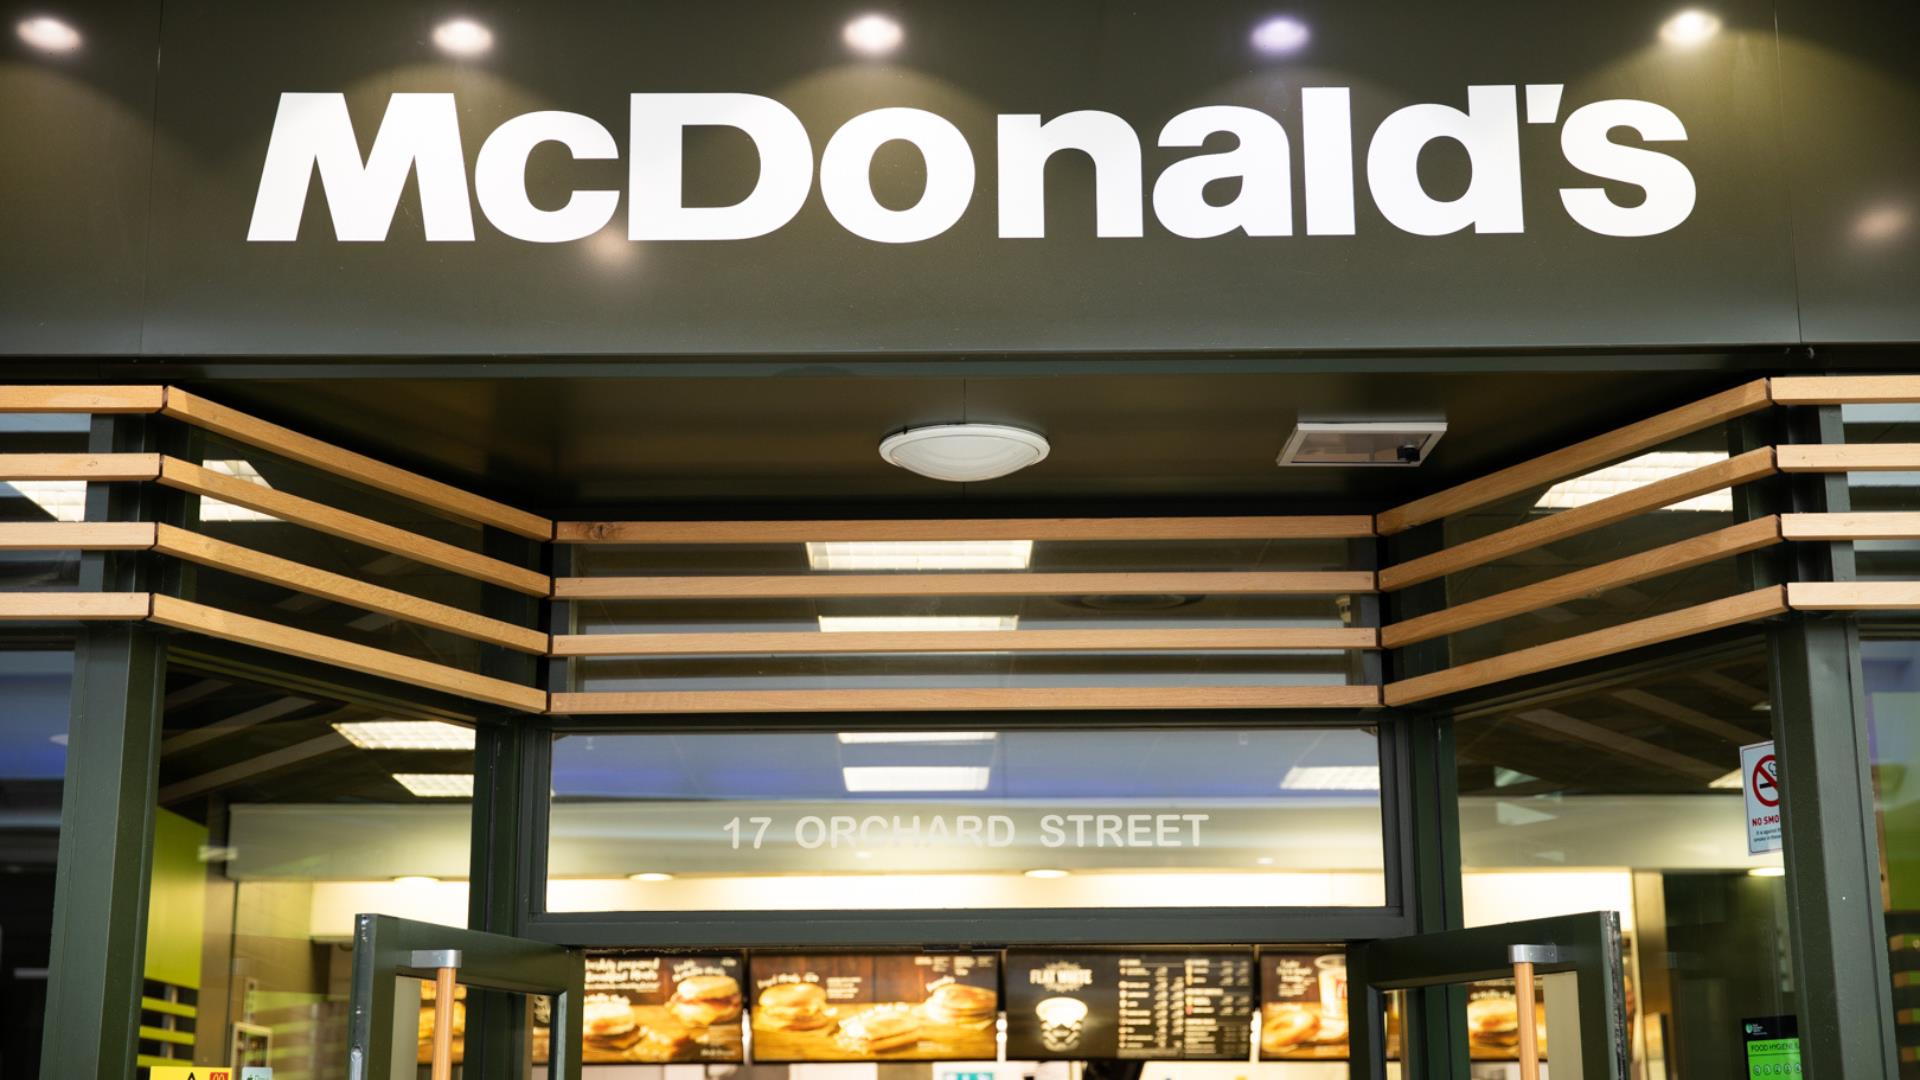 The entrance to McDonald's Restaurant at Foyleside Shopping Centre.